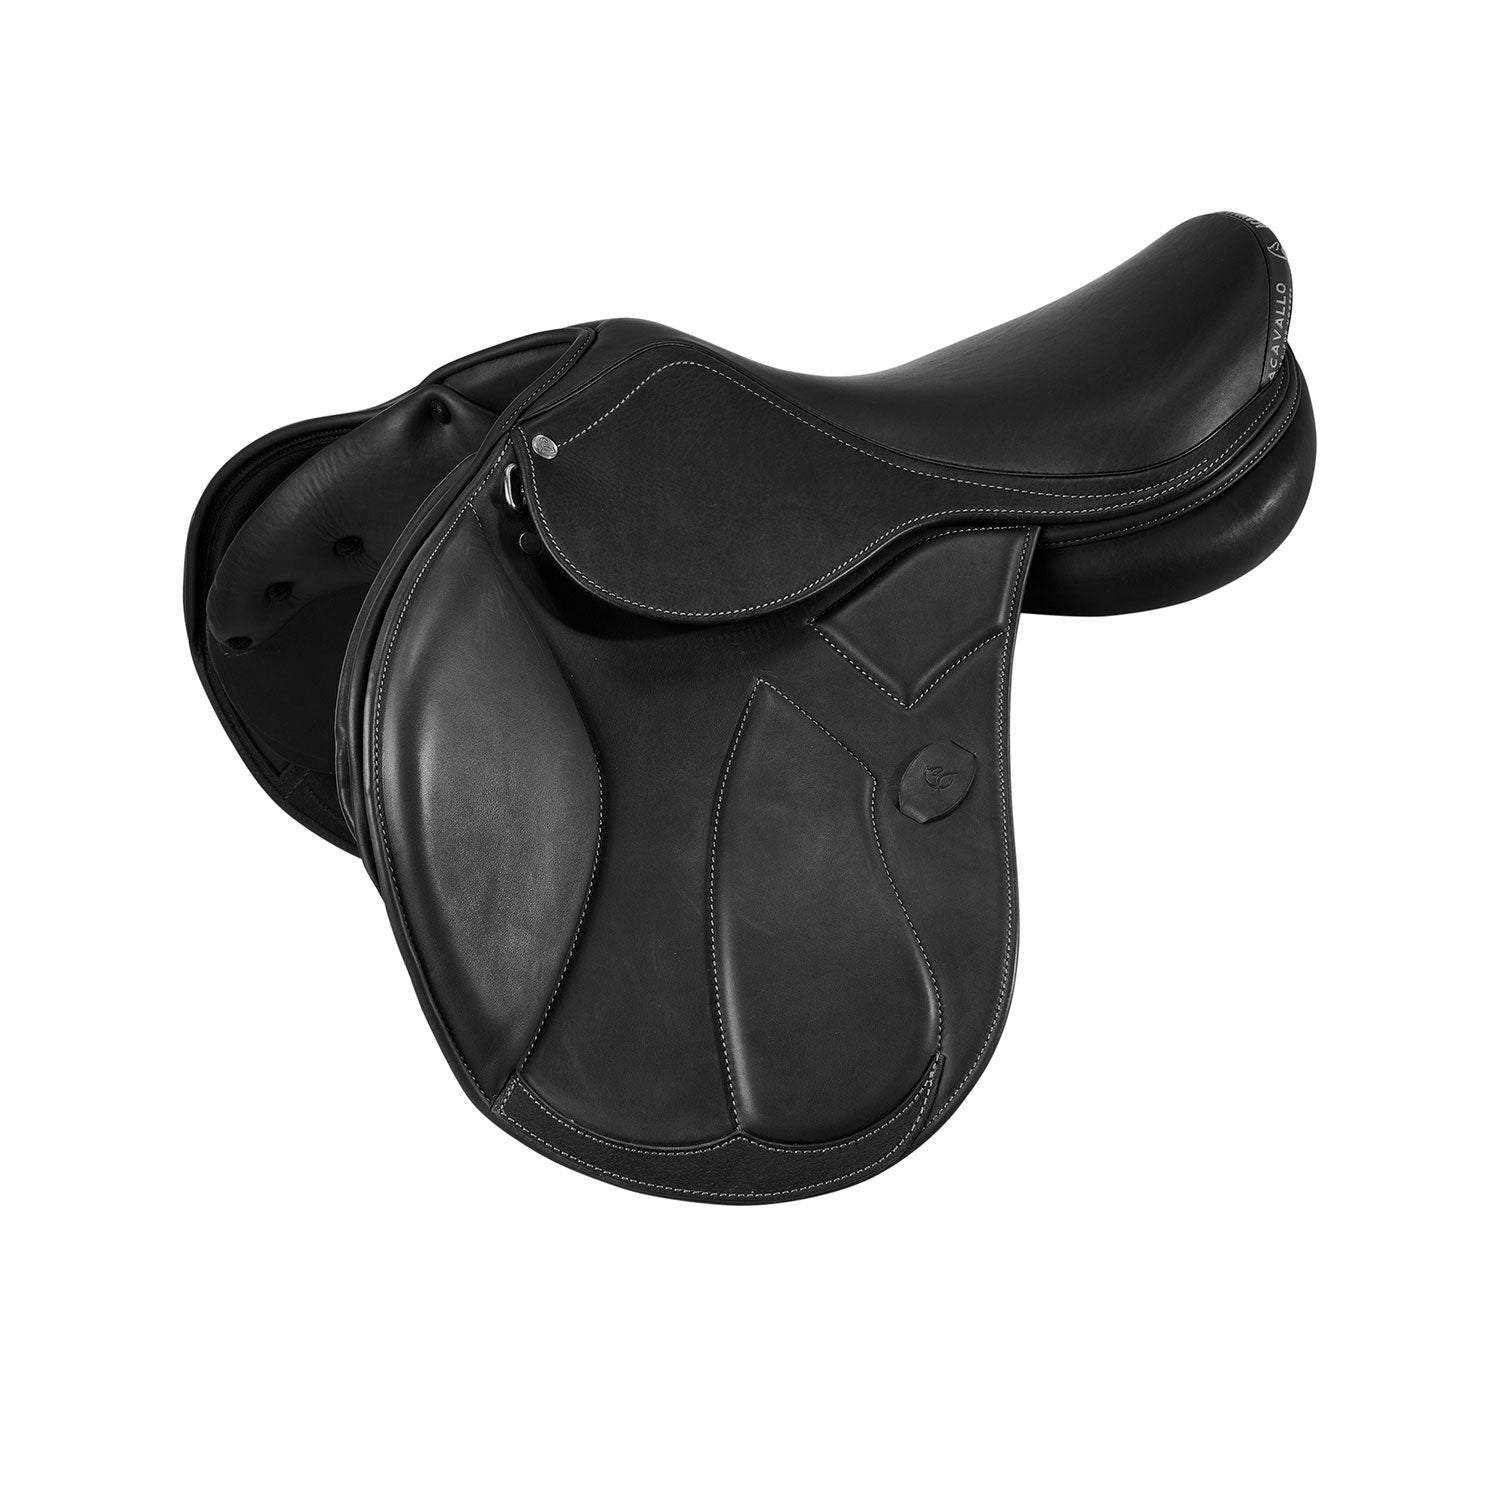 Springsattel Modigliani jumping saddle latex panels - Reitstiefel Kandel - Dein Reitshop